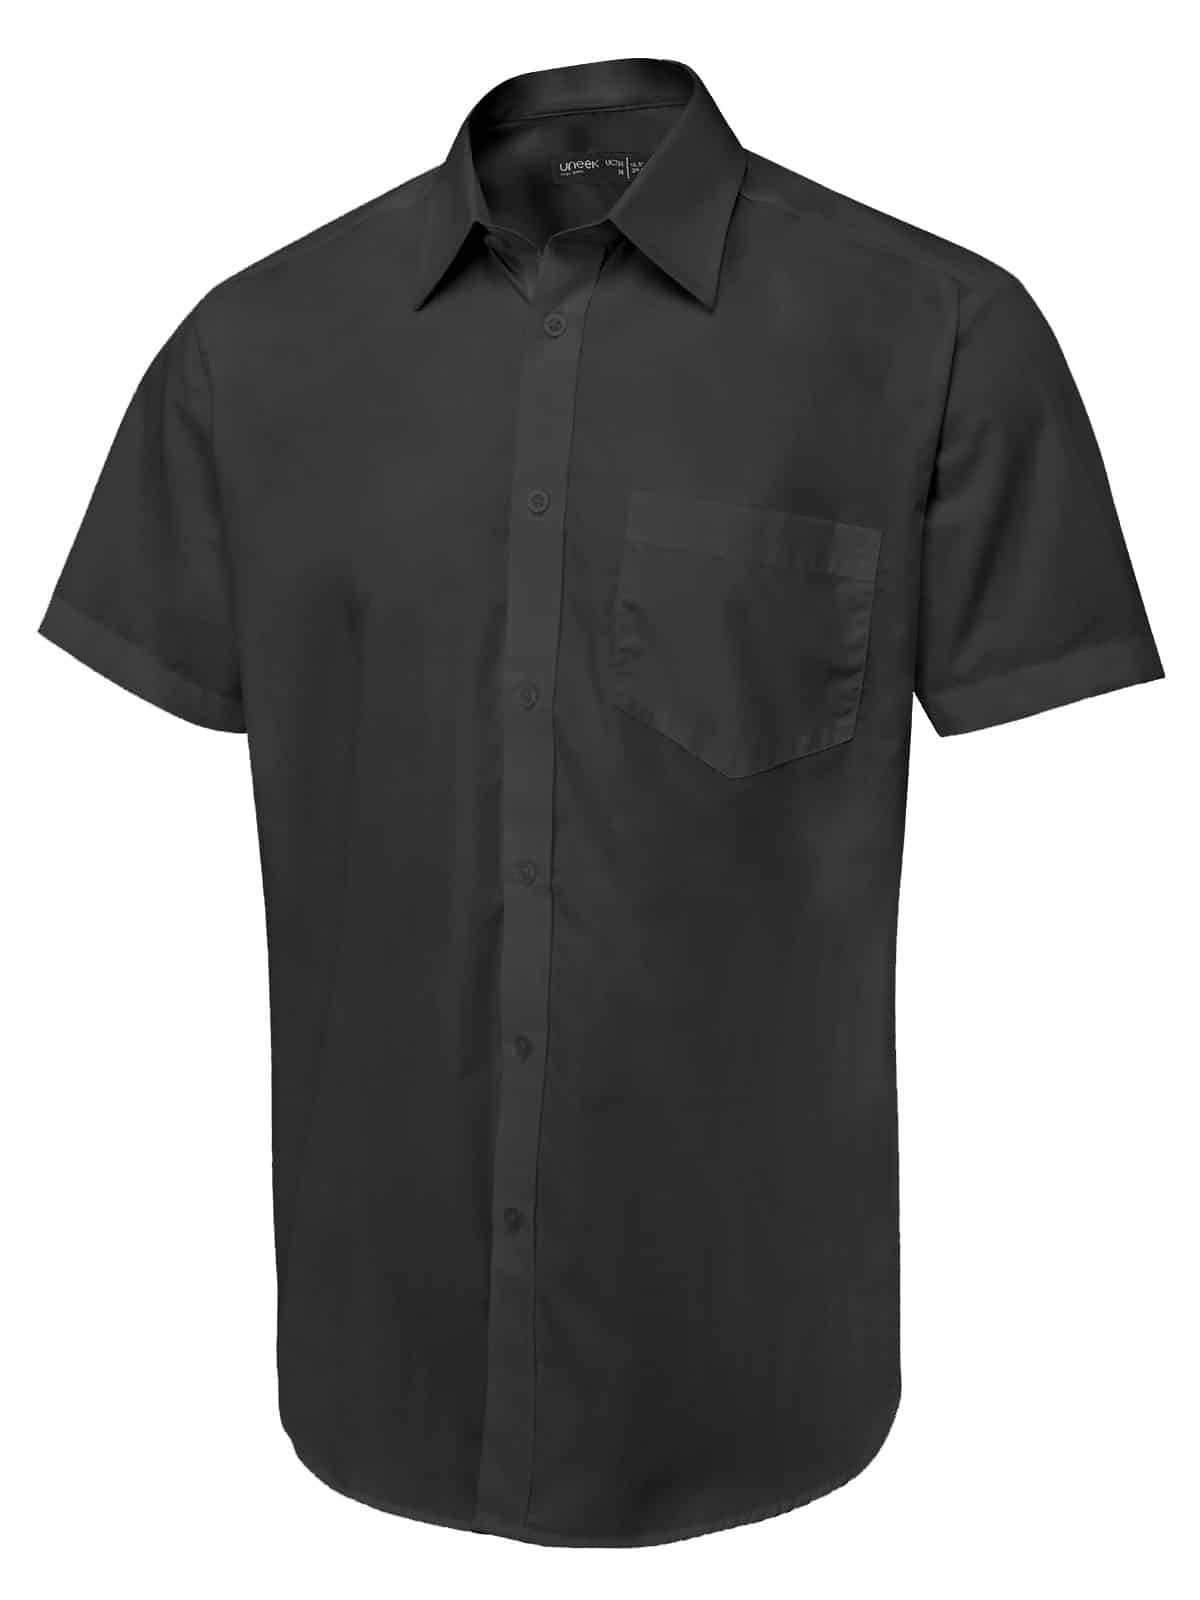 Uneek Tailored Short Sleeve Poplin Shirt - Men’s Fit